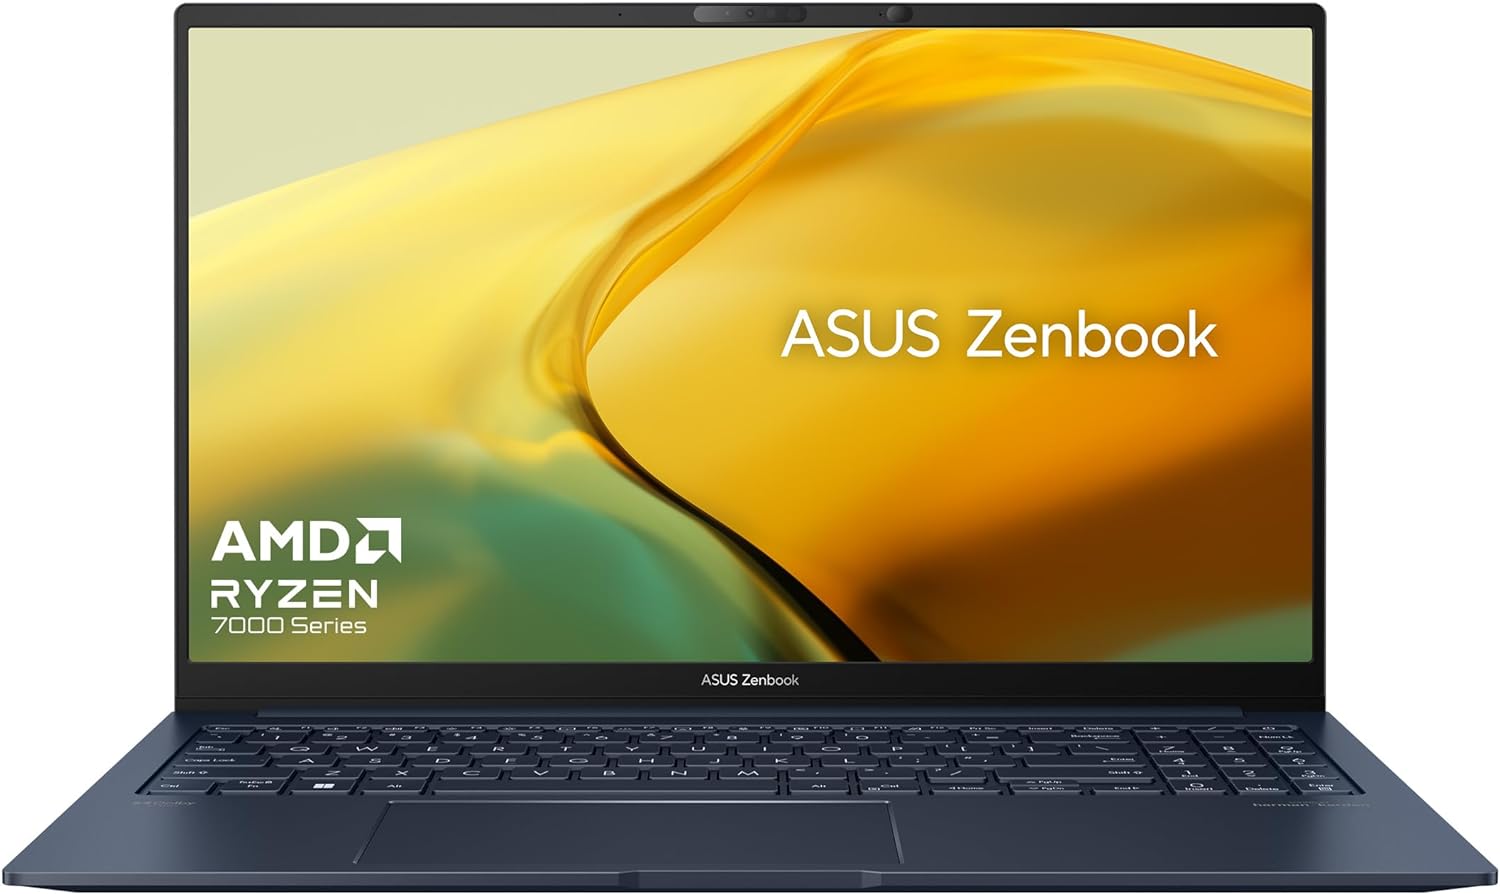 ASUS Zenbook 15 Laptop 156 FHD Display AMD Ryzen 5 753 - Alaska - Anchorage ID1534359